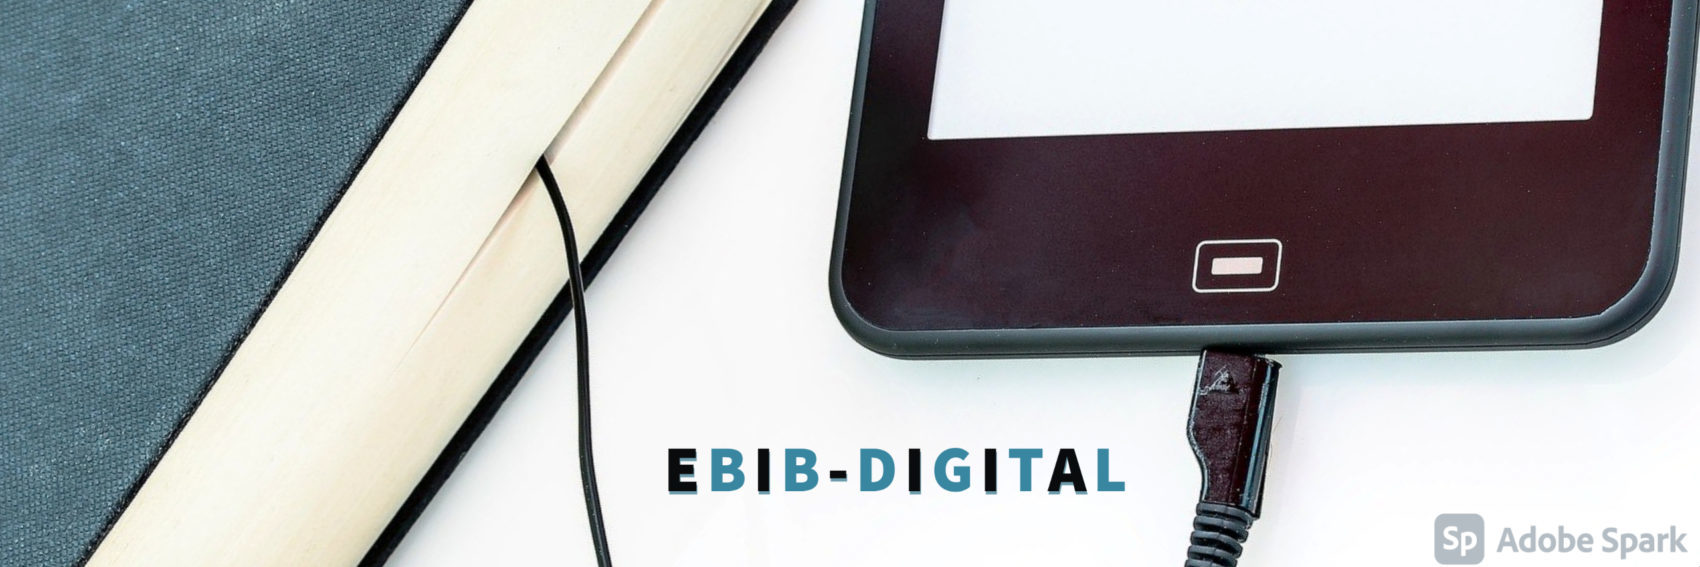 Ebib-Digital